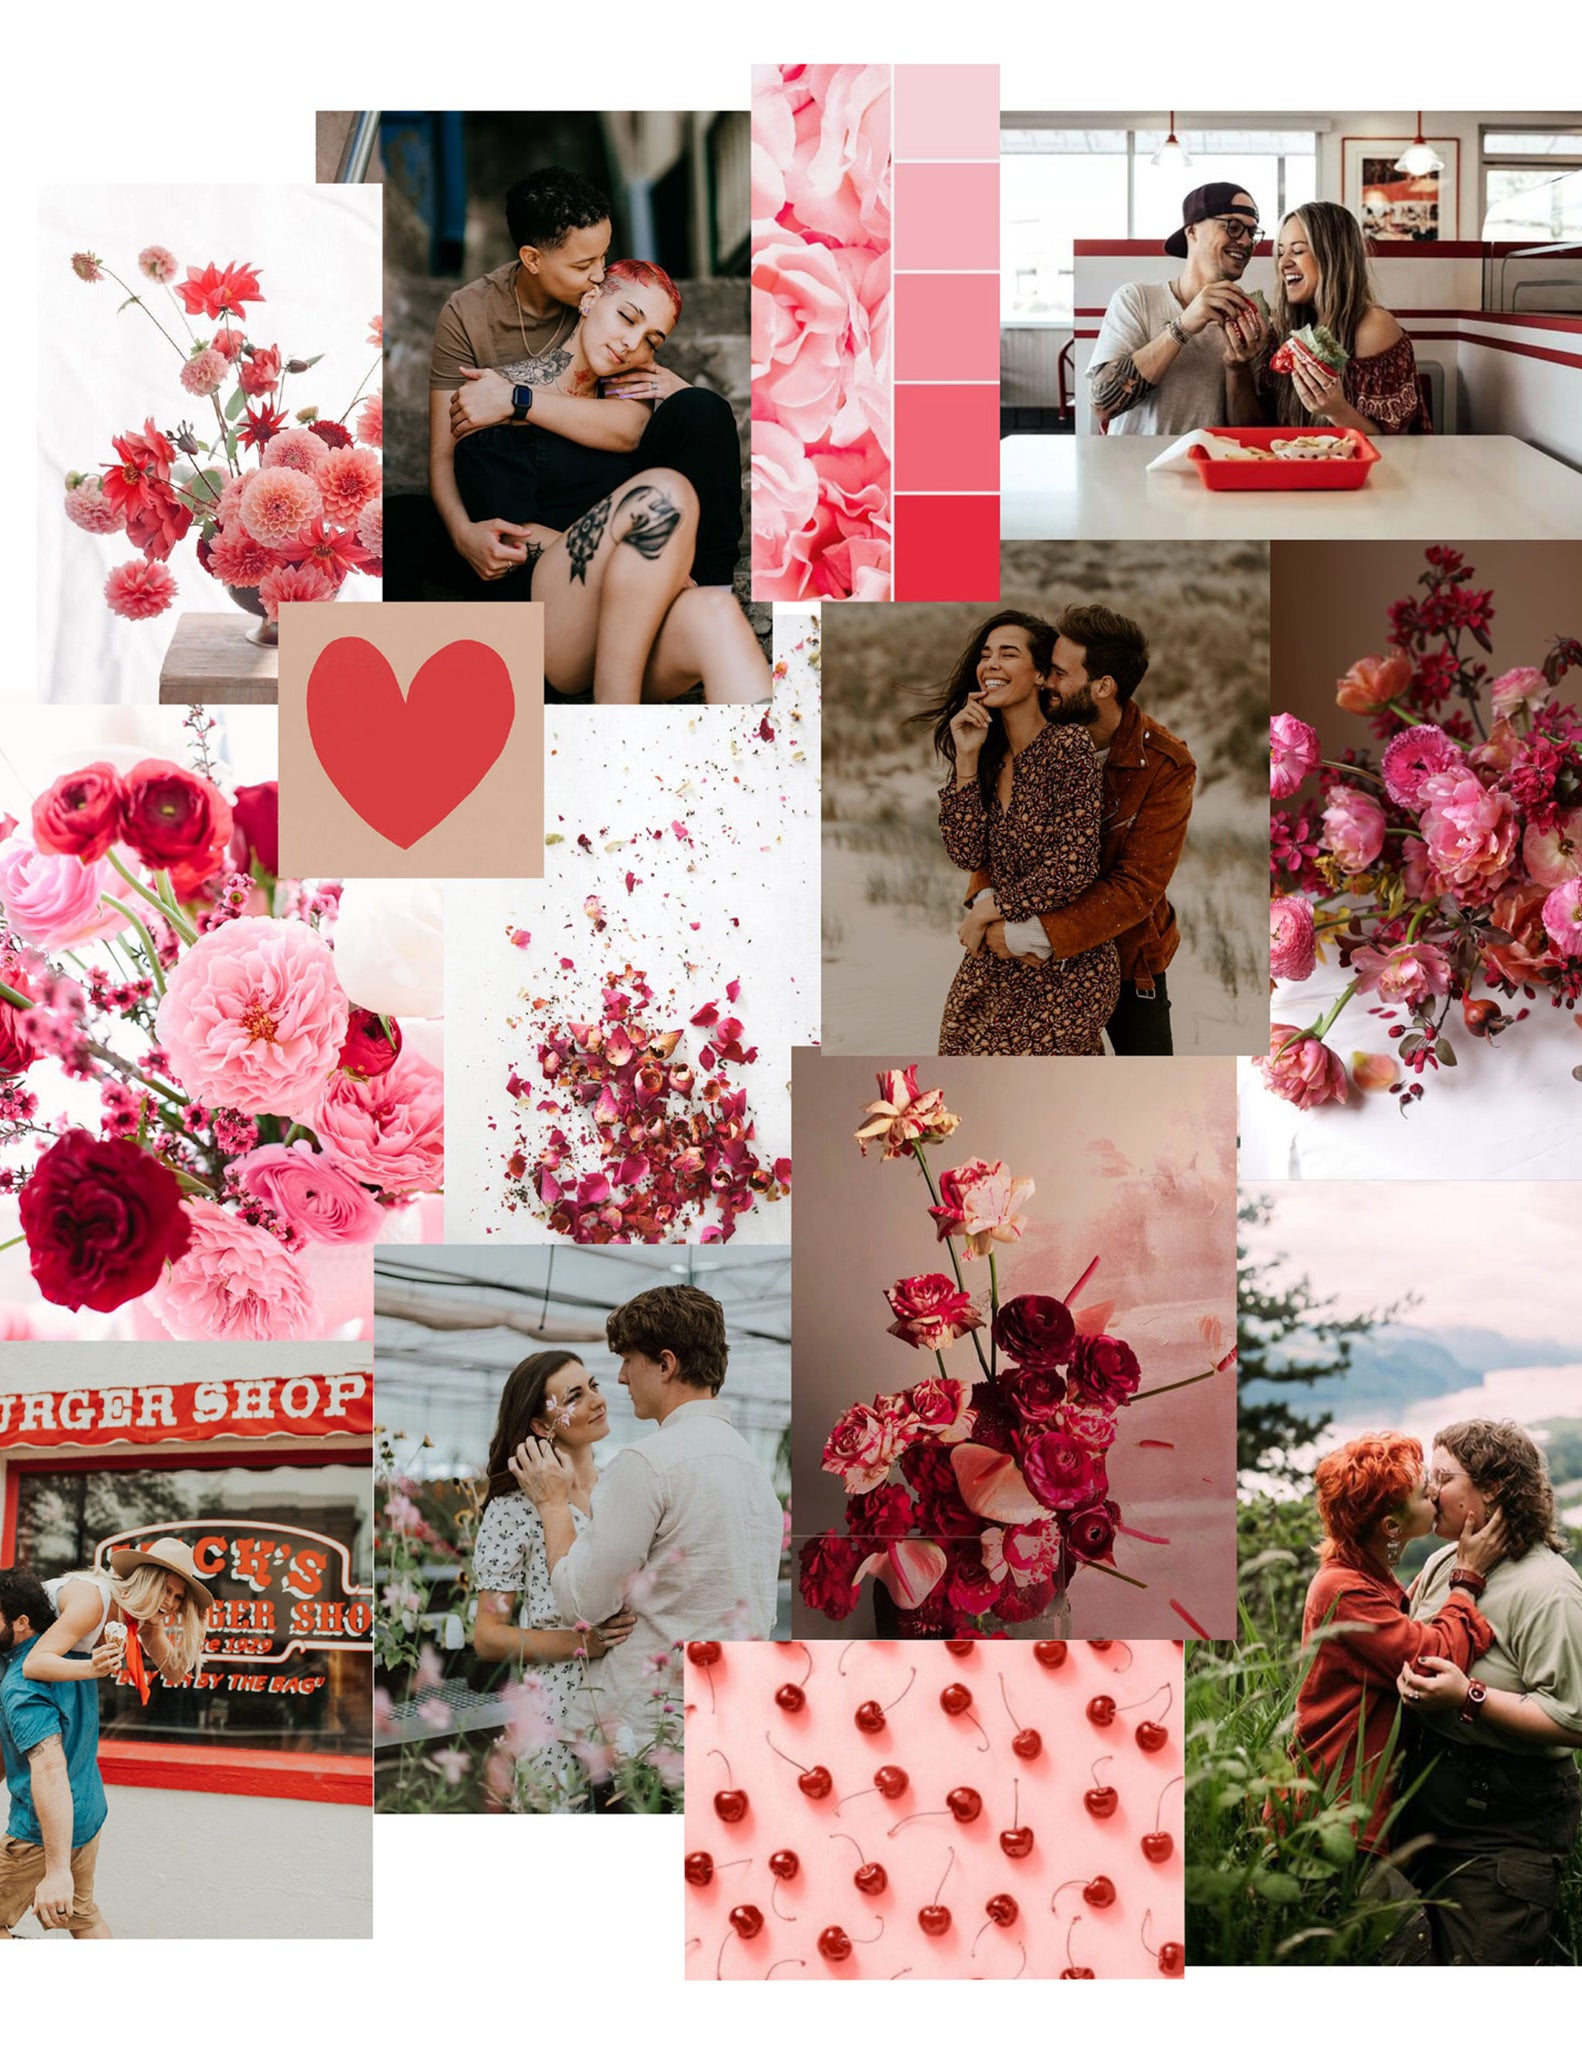 Native Poppy's Valentine’s Day Mood Board